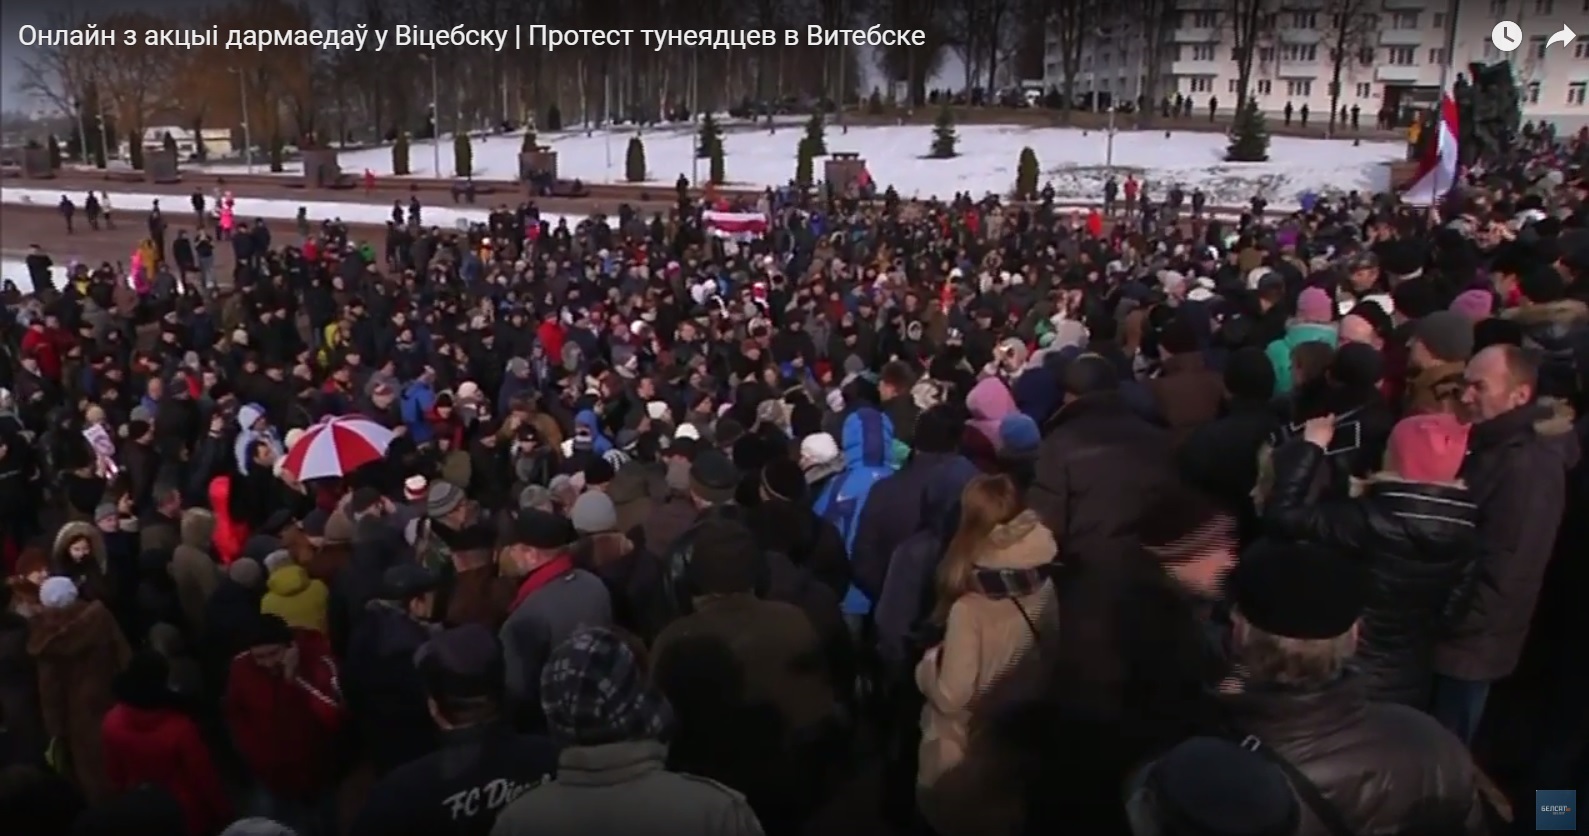 Protest against the vagrants tax in Vitebsk, February 25, 2017 (Image: Belsat video capture)